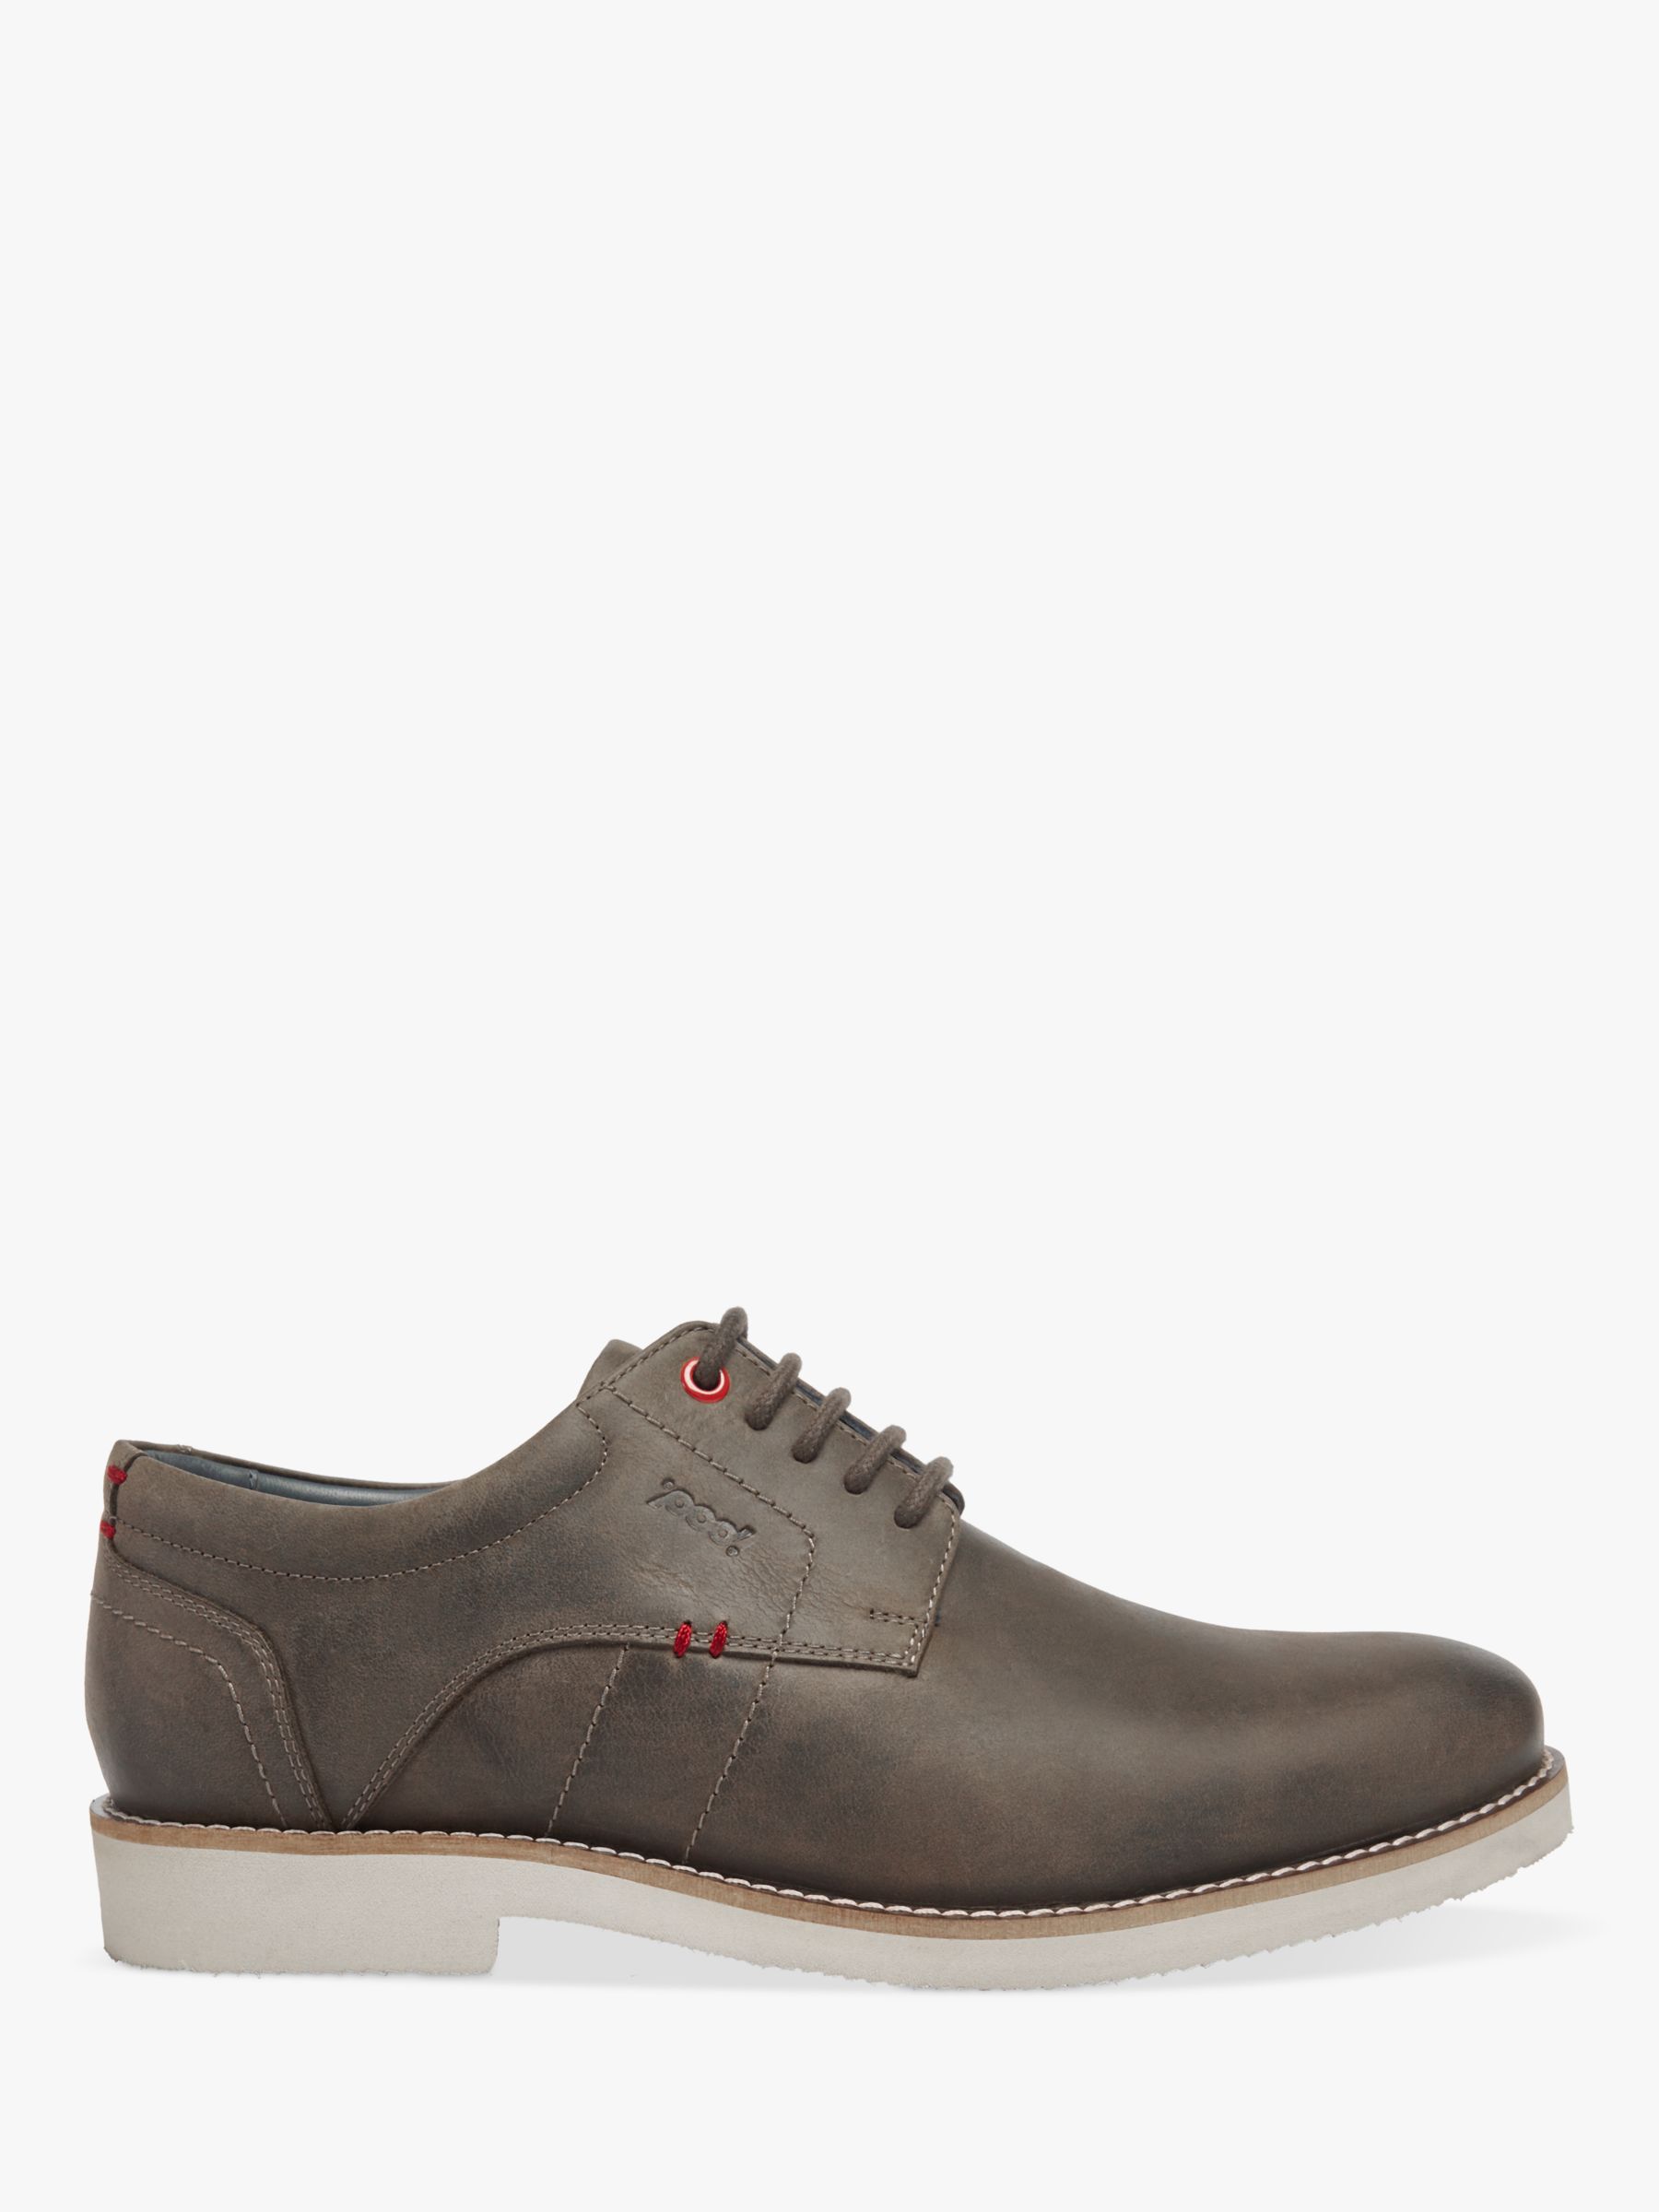 Pod Hampton Leather Lace Up Shoes, Grey, 6